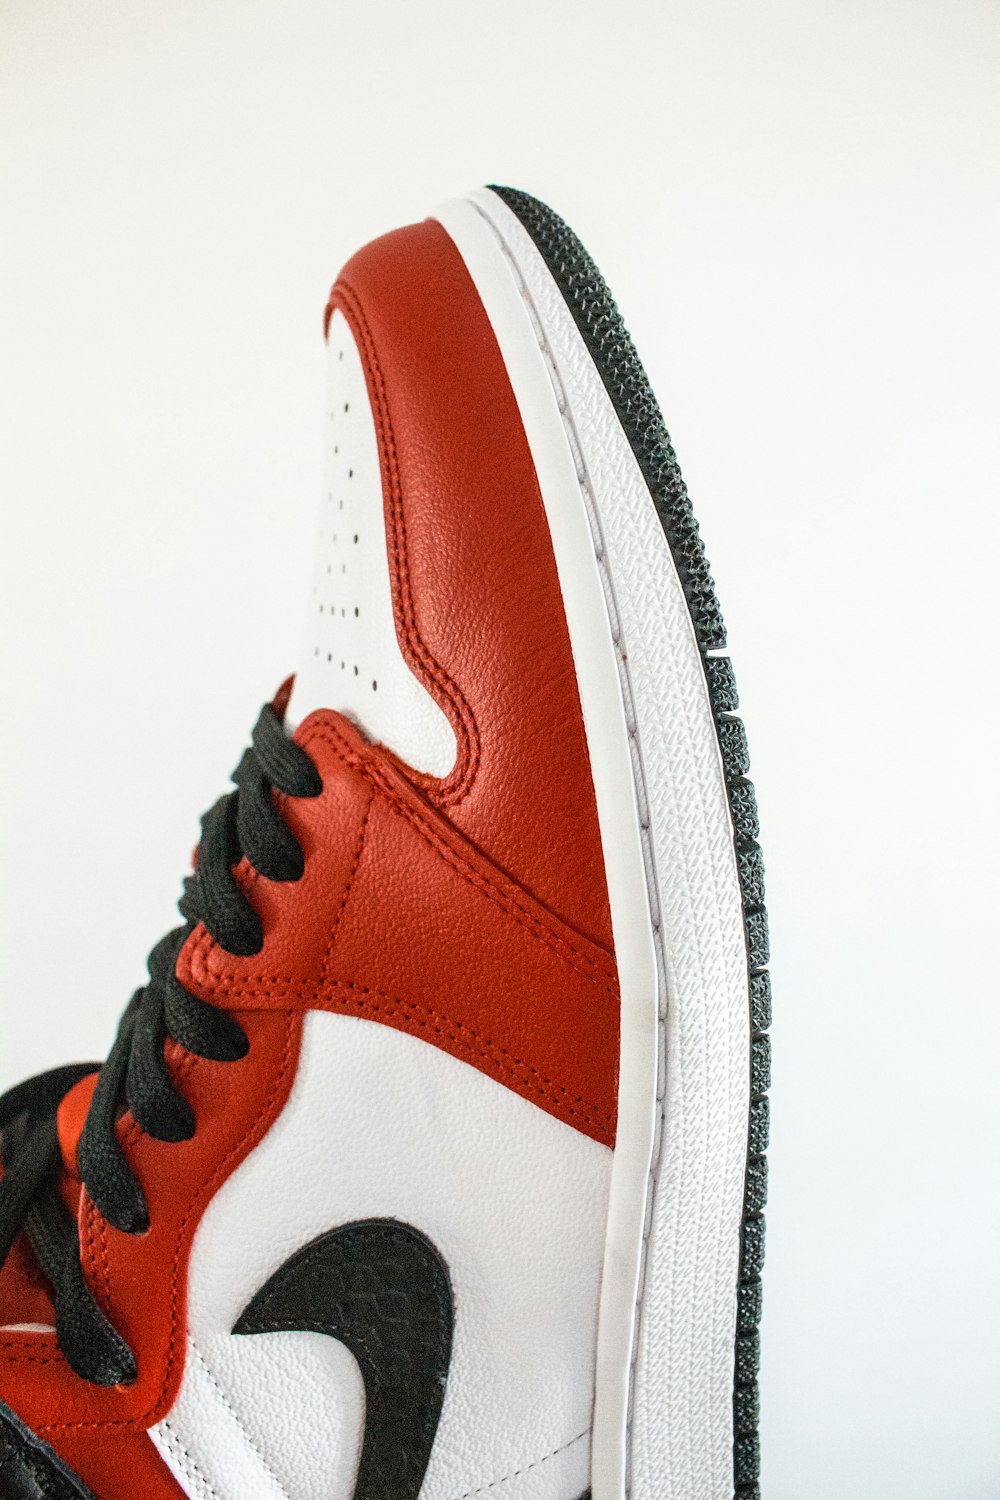 Green and white nike shoe photo – Free Sneaker Image on Unsplash